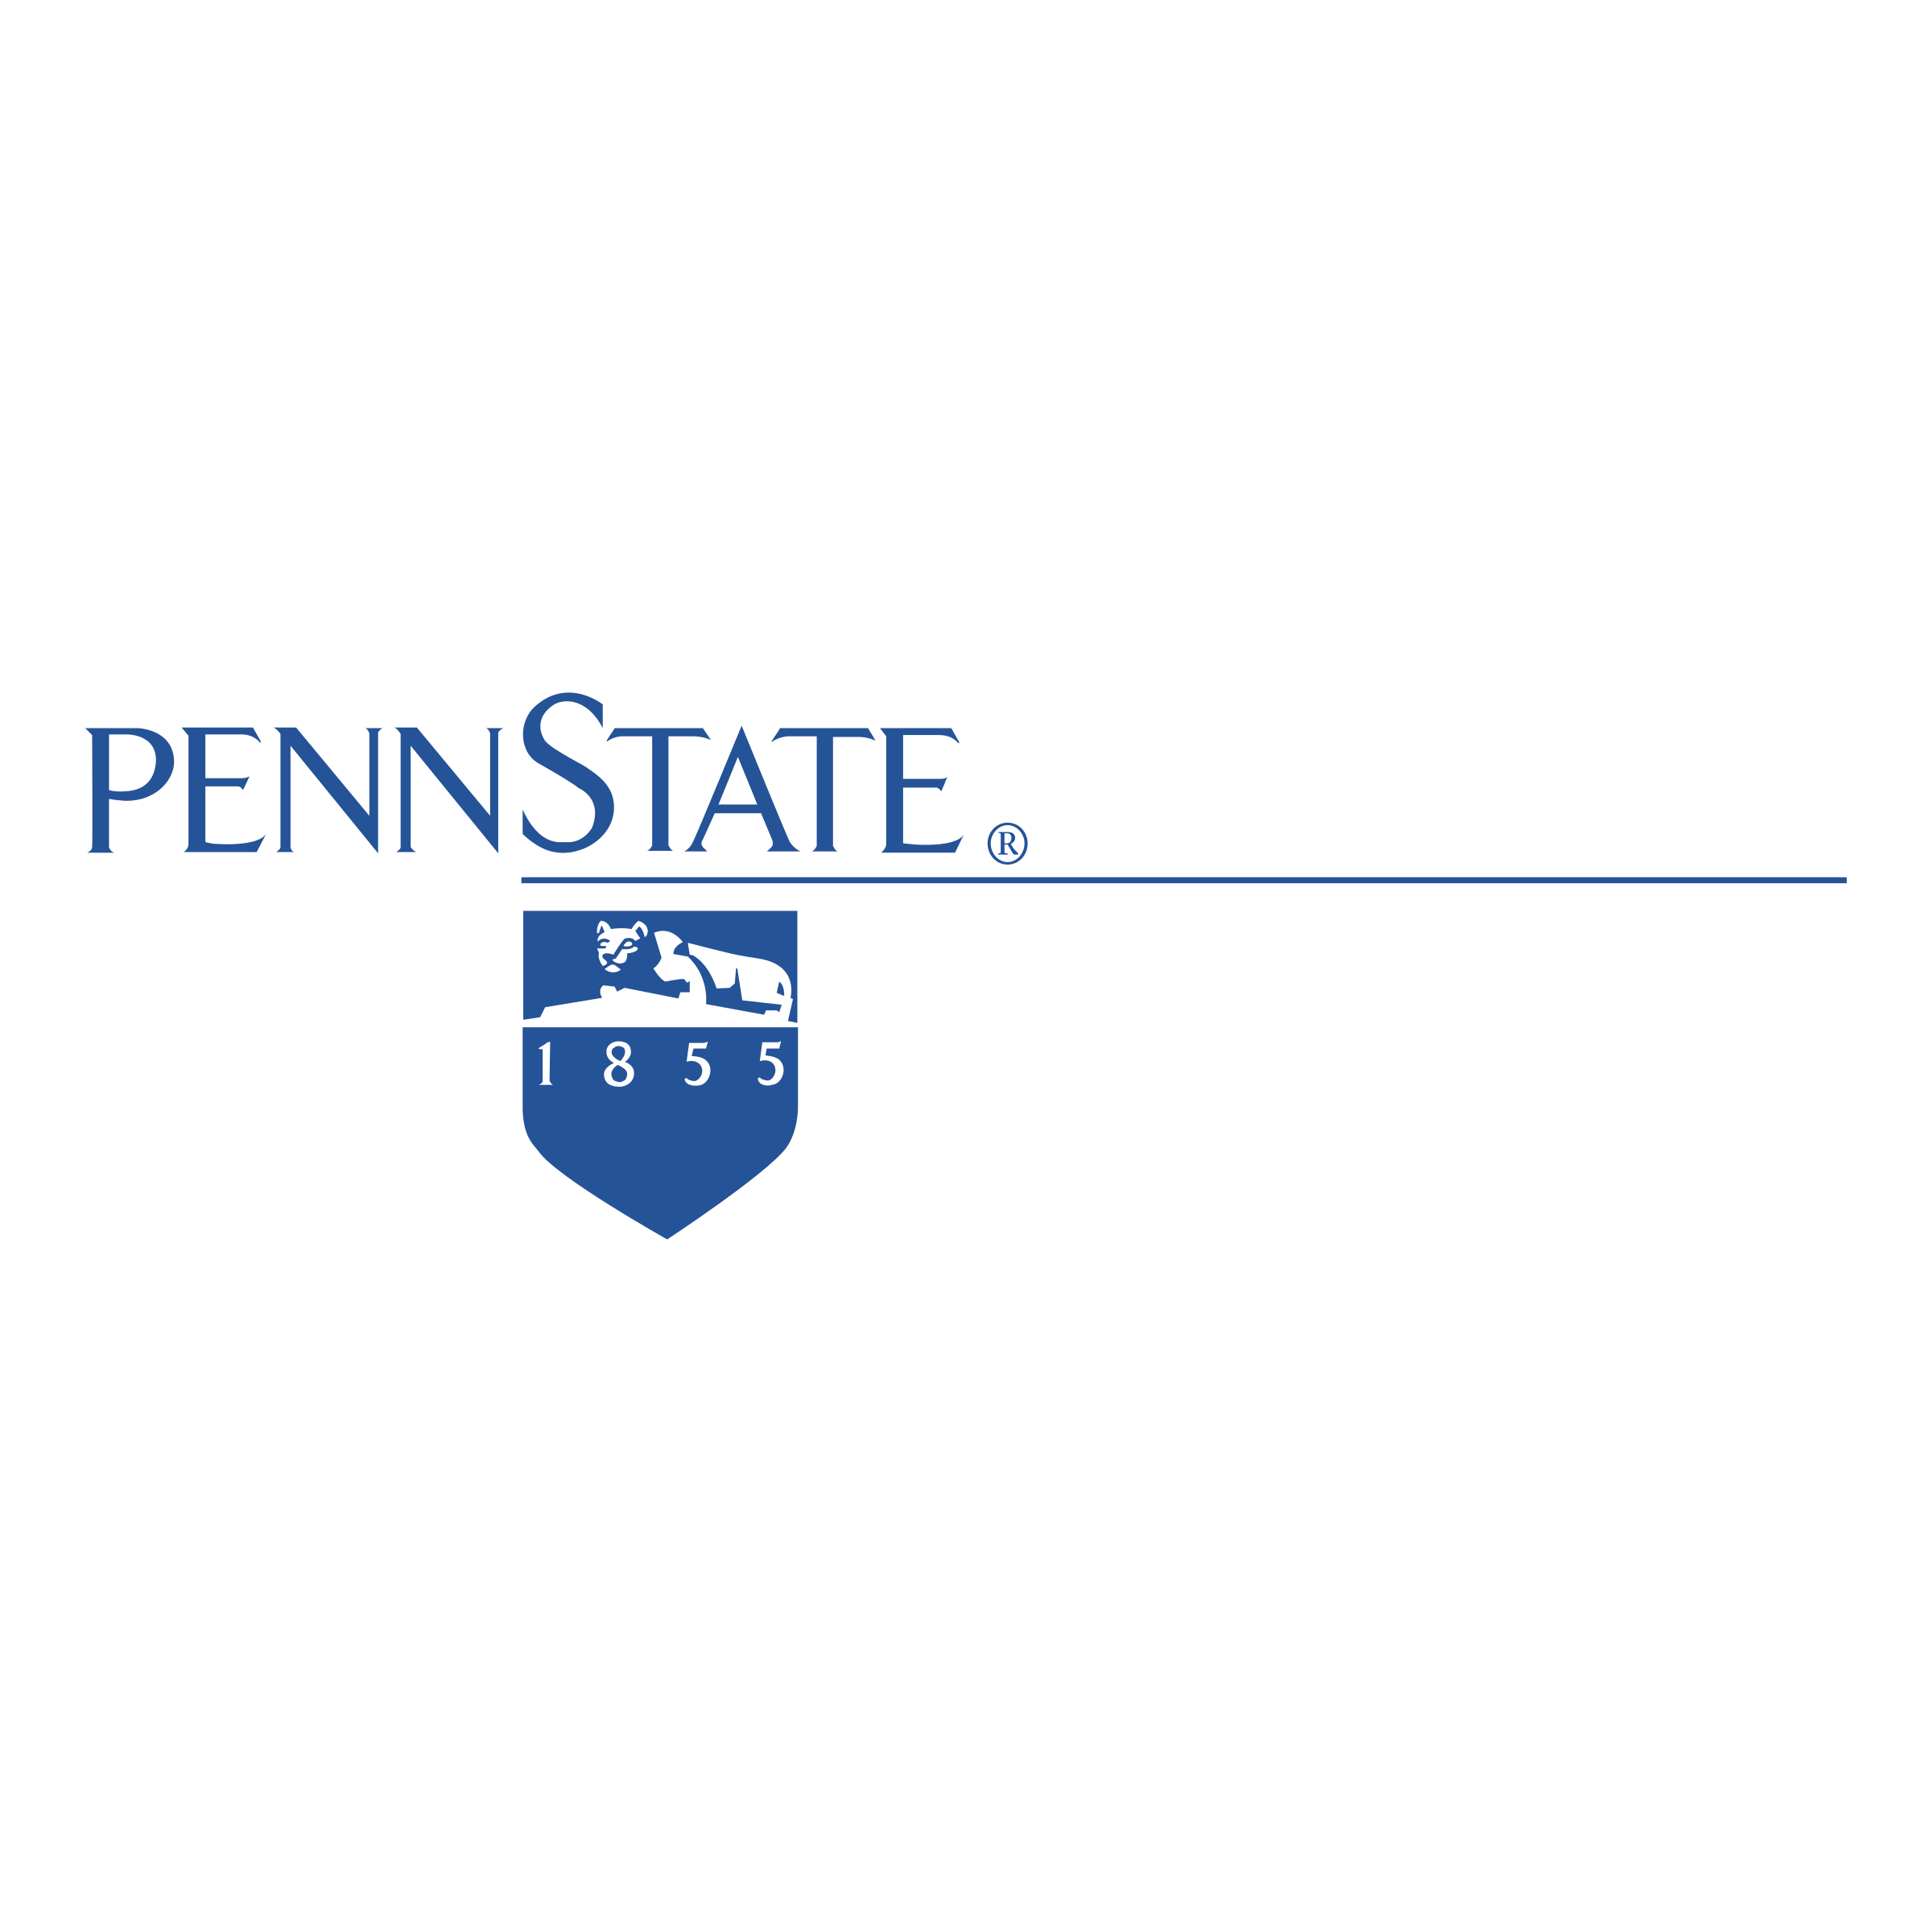 PennState_logo.png